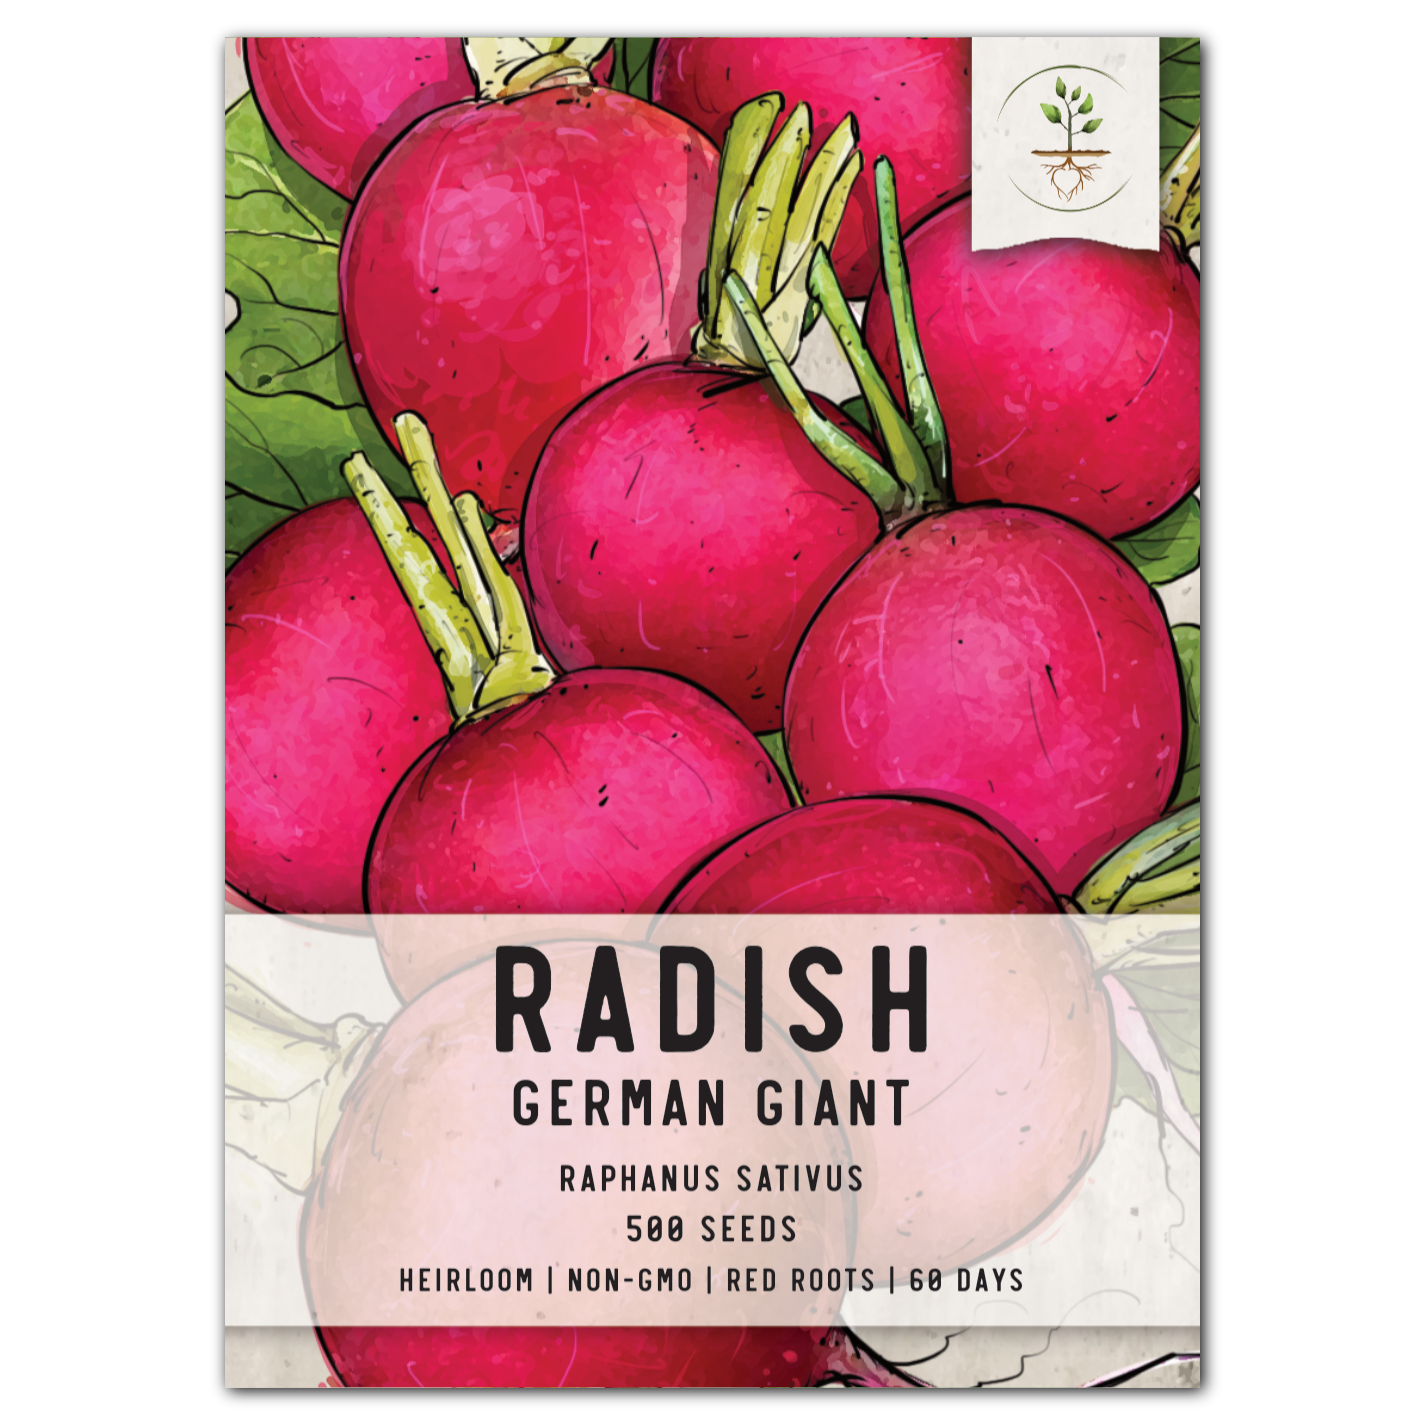 german giant radish seeds for planting